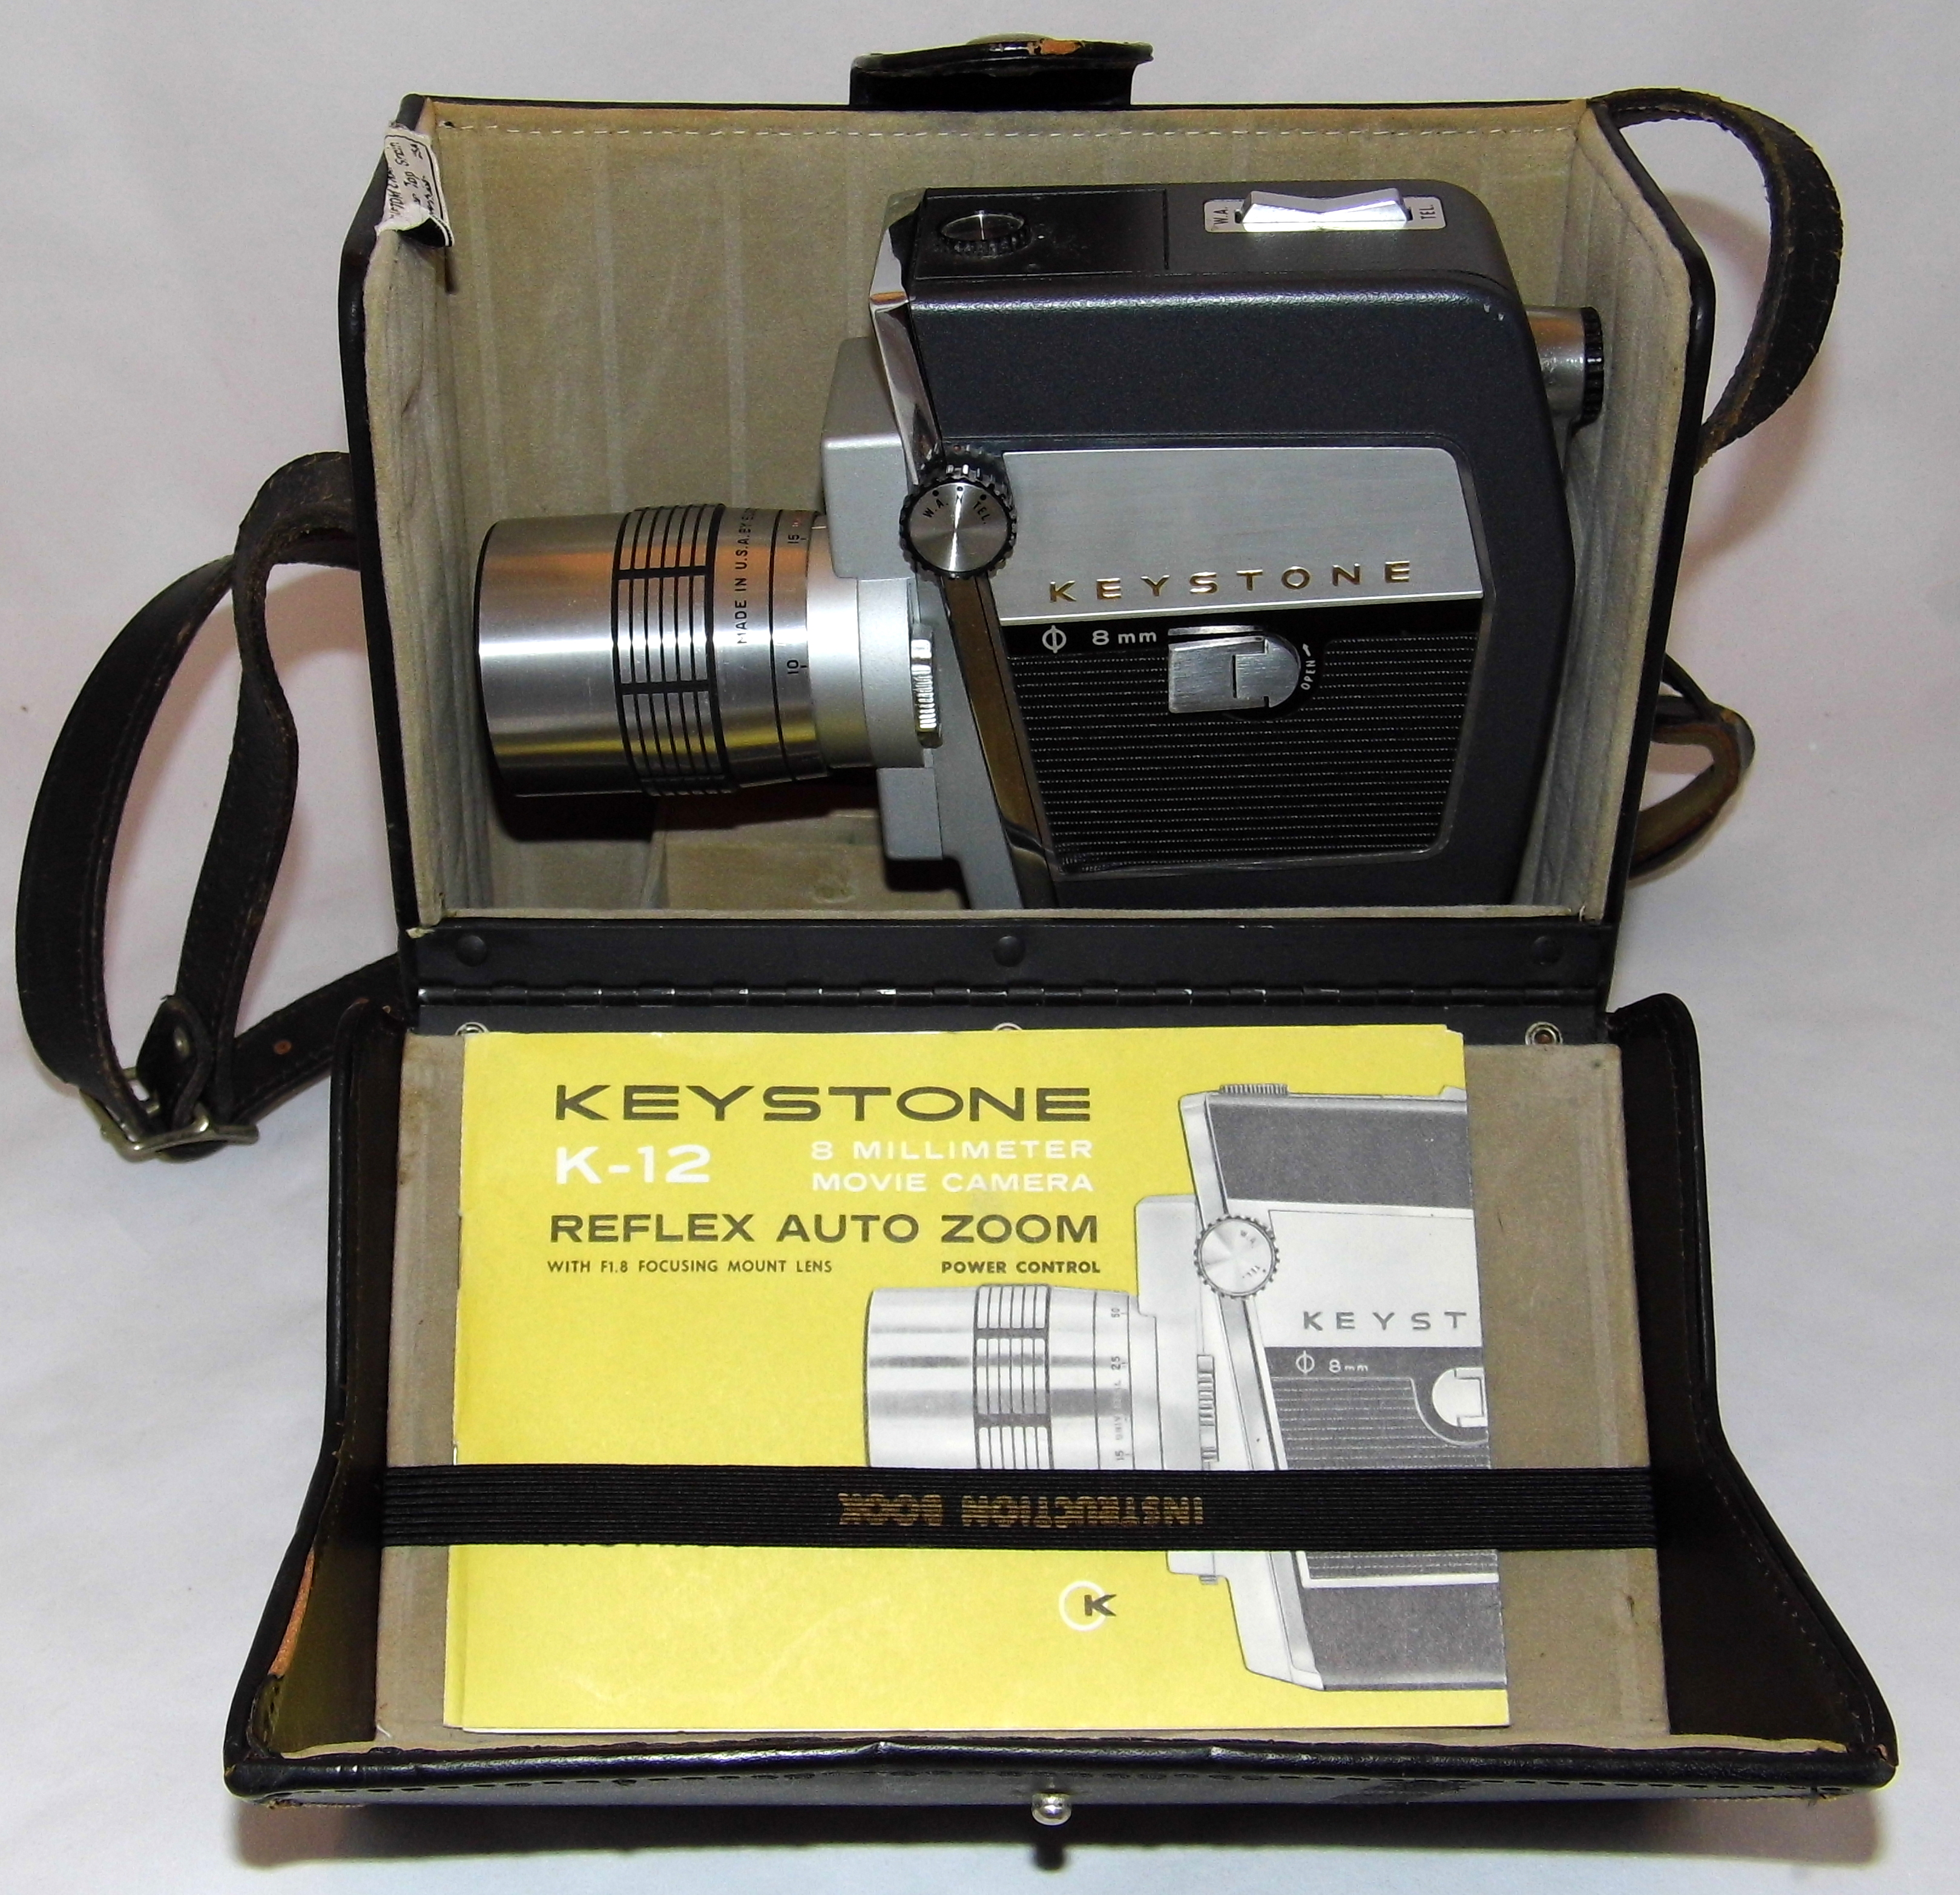 Vintage Keystone 8mm Reflex Auto Zoom Movie Camera, Model K-12, Made In USA, Circa 1963 (23381562294)